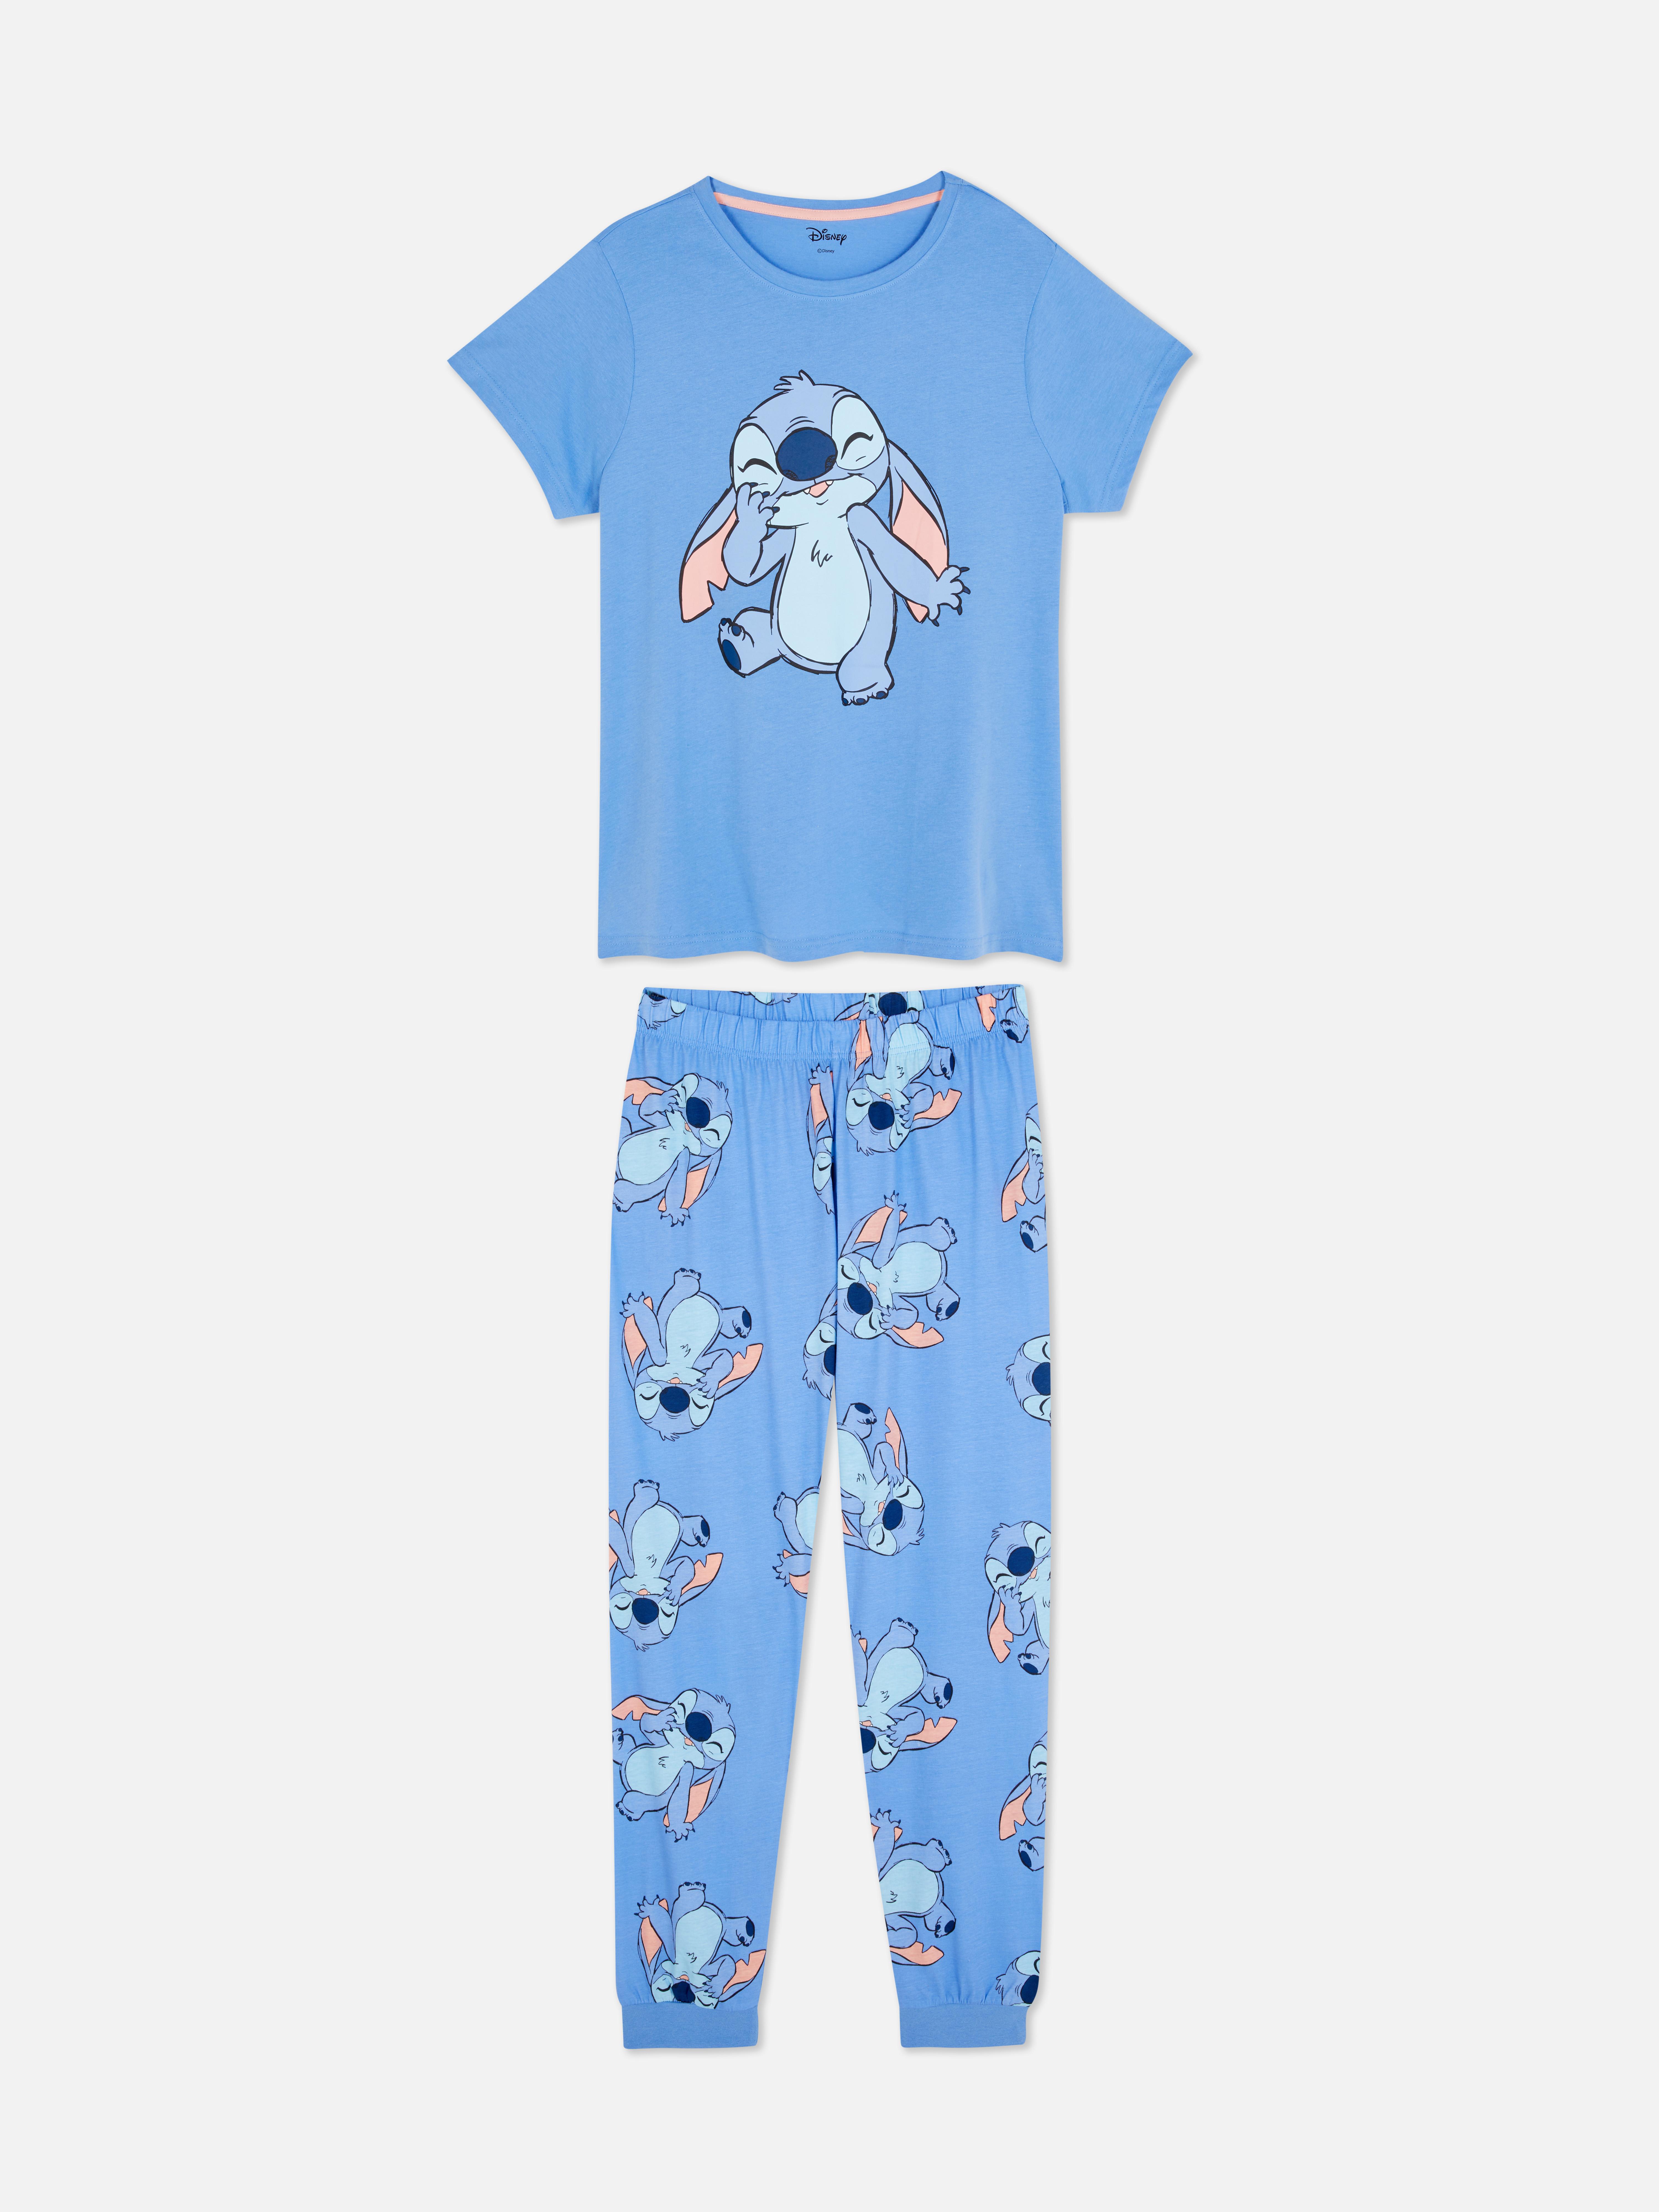 Disney Graphic T-Shirt and Bottoms Pyjamas